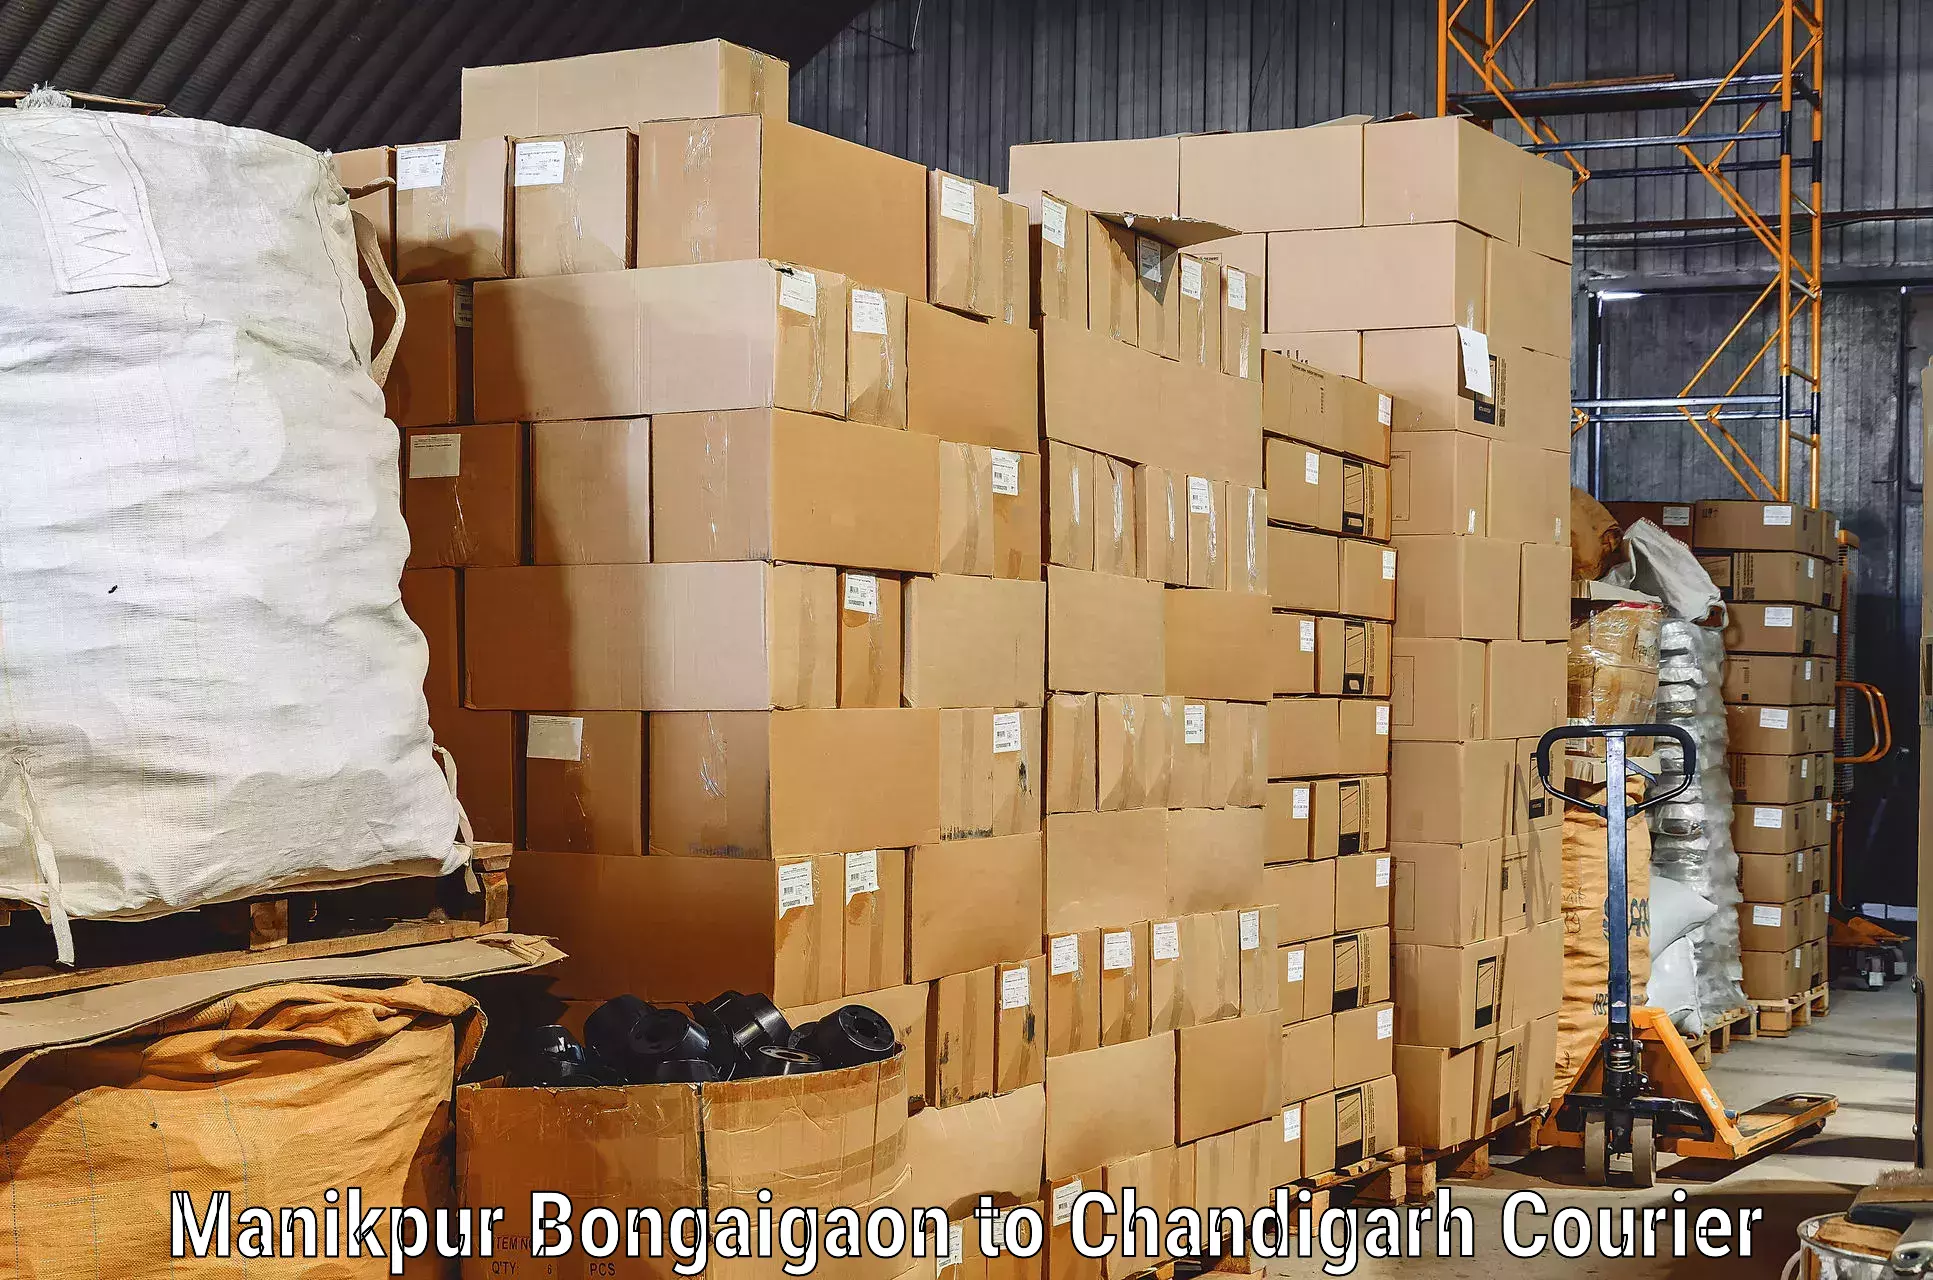 Furniture transport specialists Manikpur Bongaigaon to Chandigarh